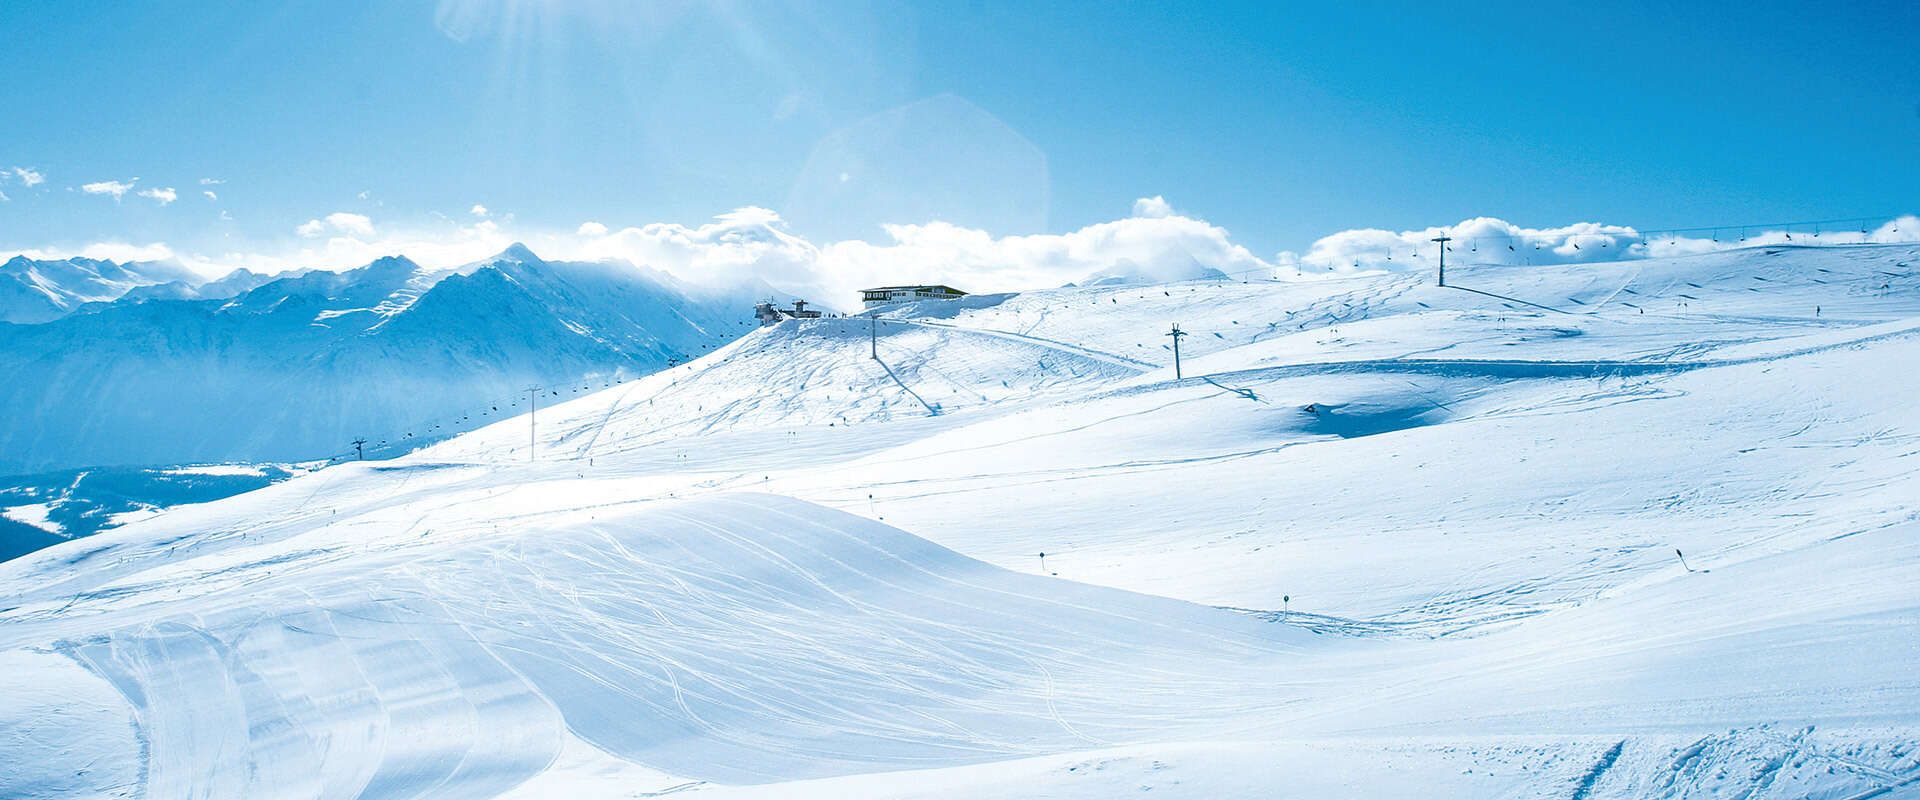 Zillertal ski area in Tyrol